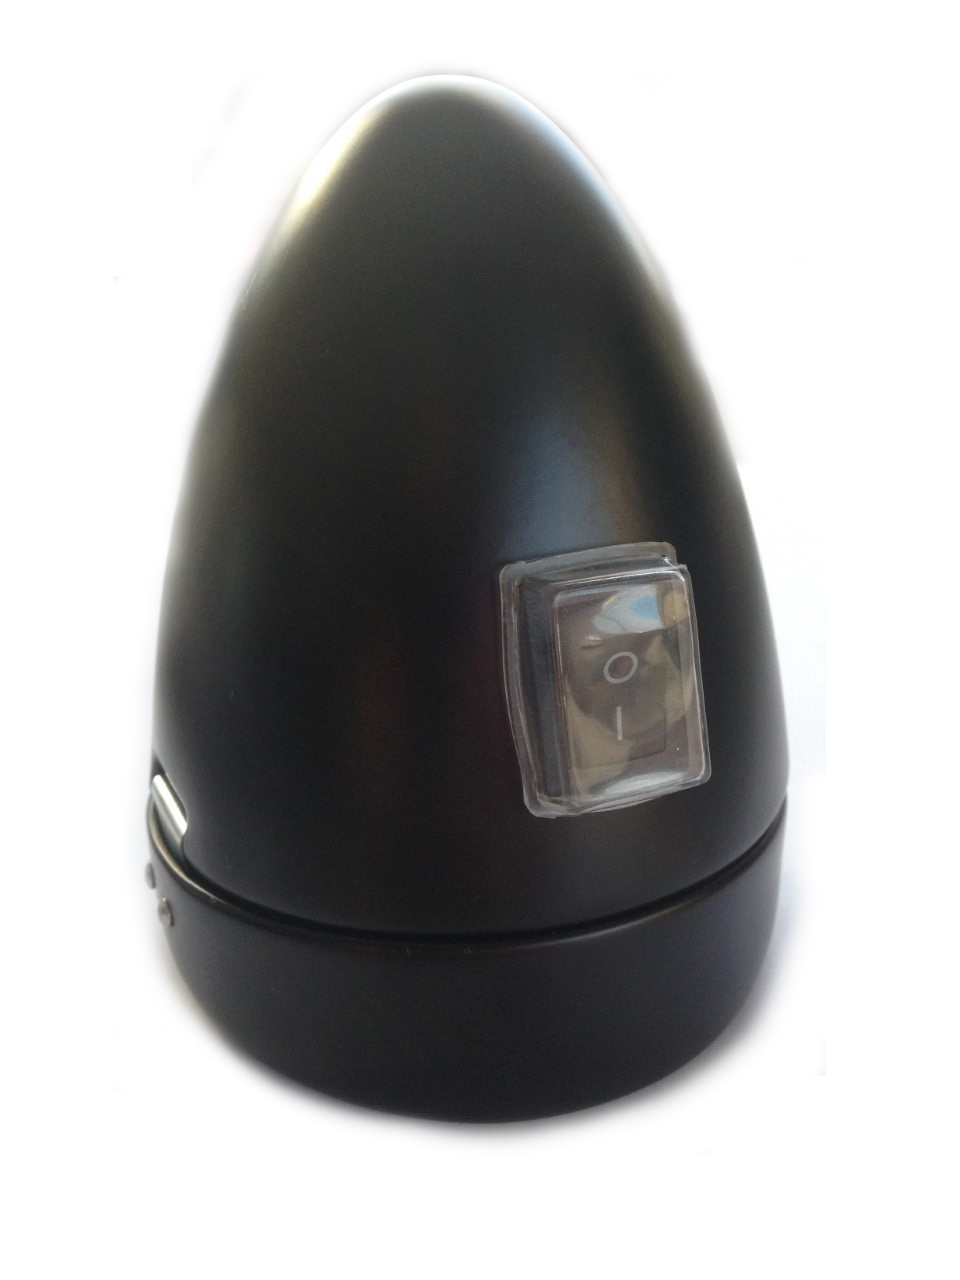 Lámpara delantera de 6 LED, de pilas, 80 mm en negro mate